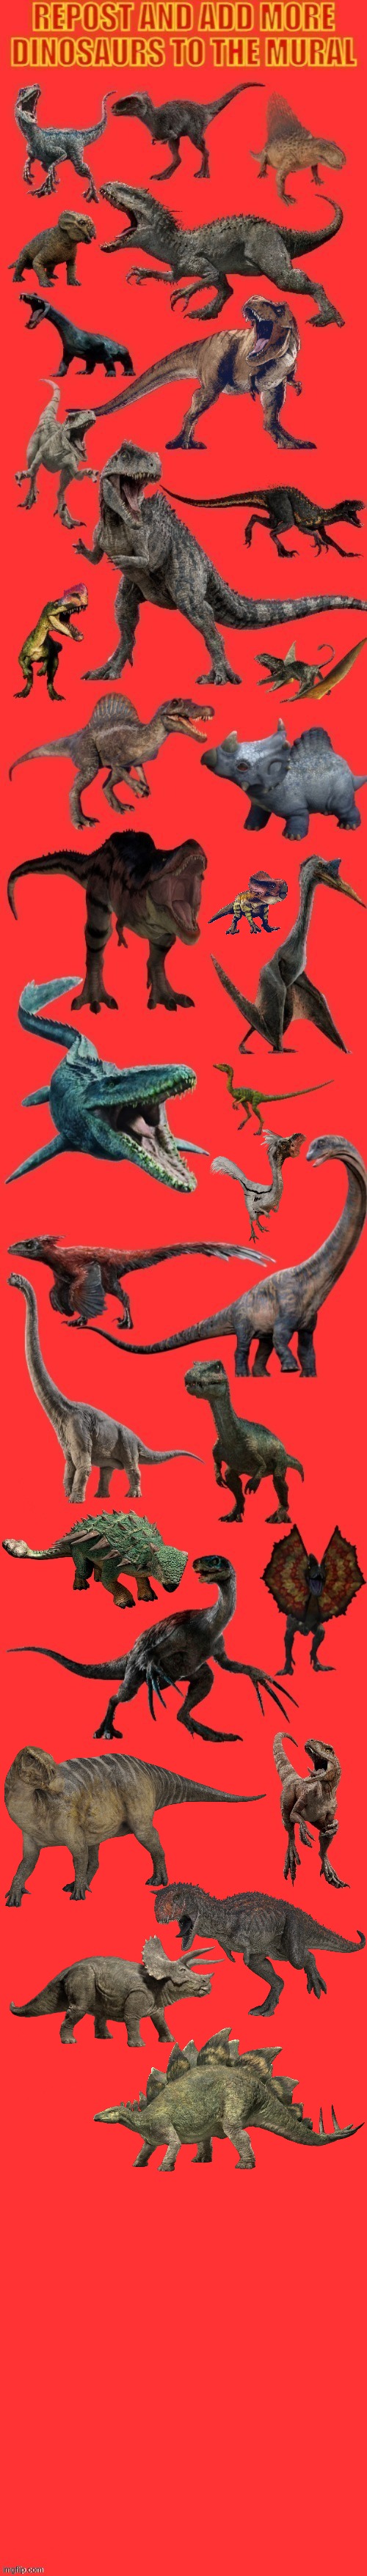 image tagged in jurassic park,jurassic world,dinosaur | made w/ Imgflip meme maker